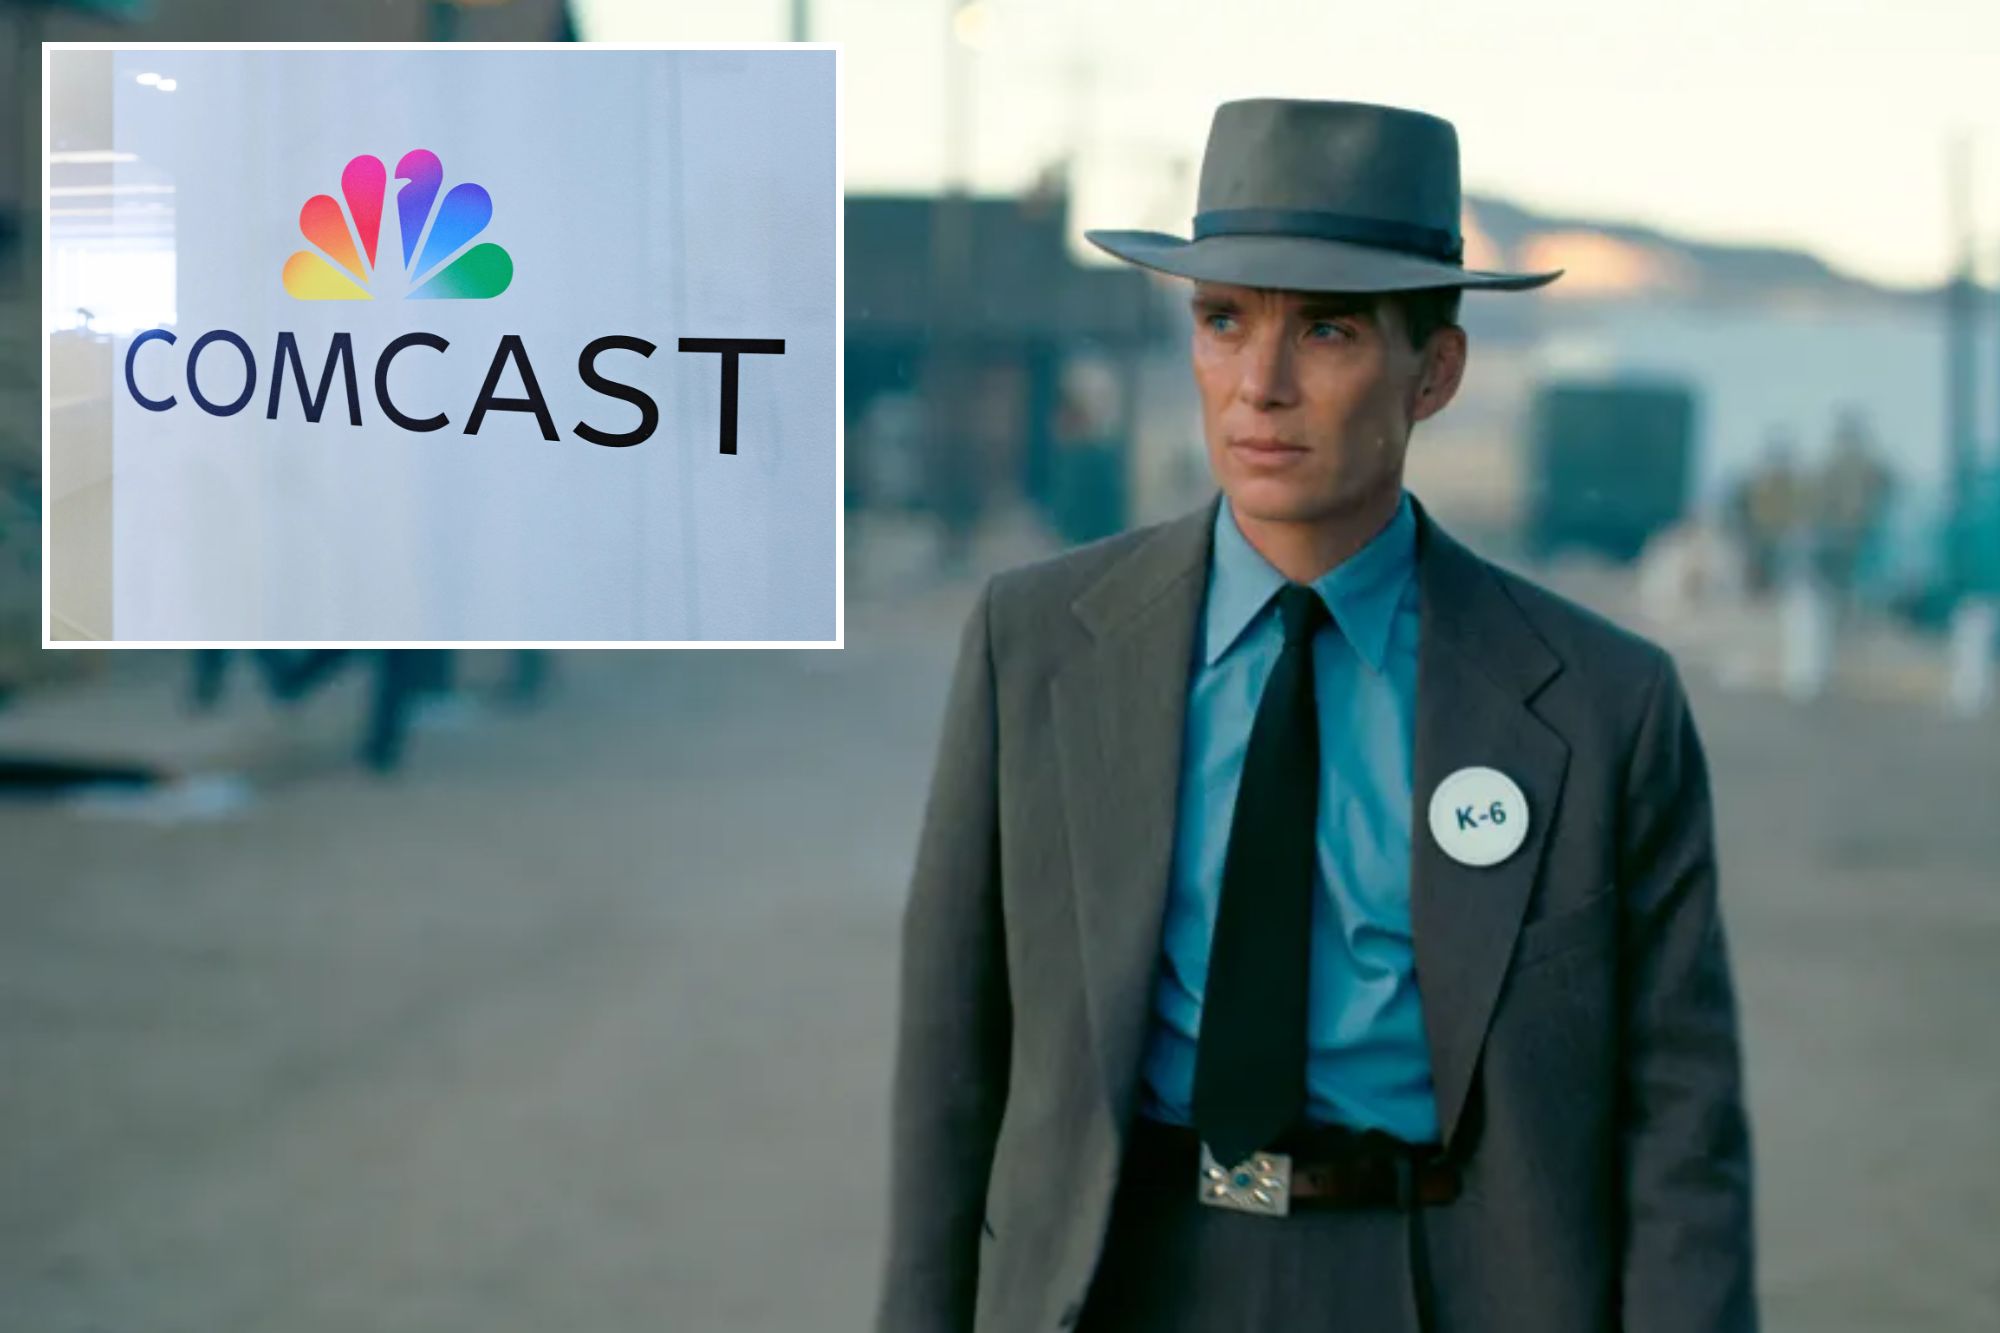 Comcast logo and Cillian Murphy in "Oppenheimer"